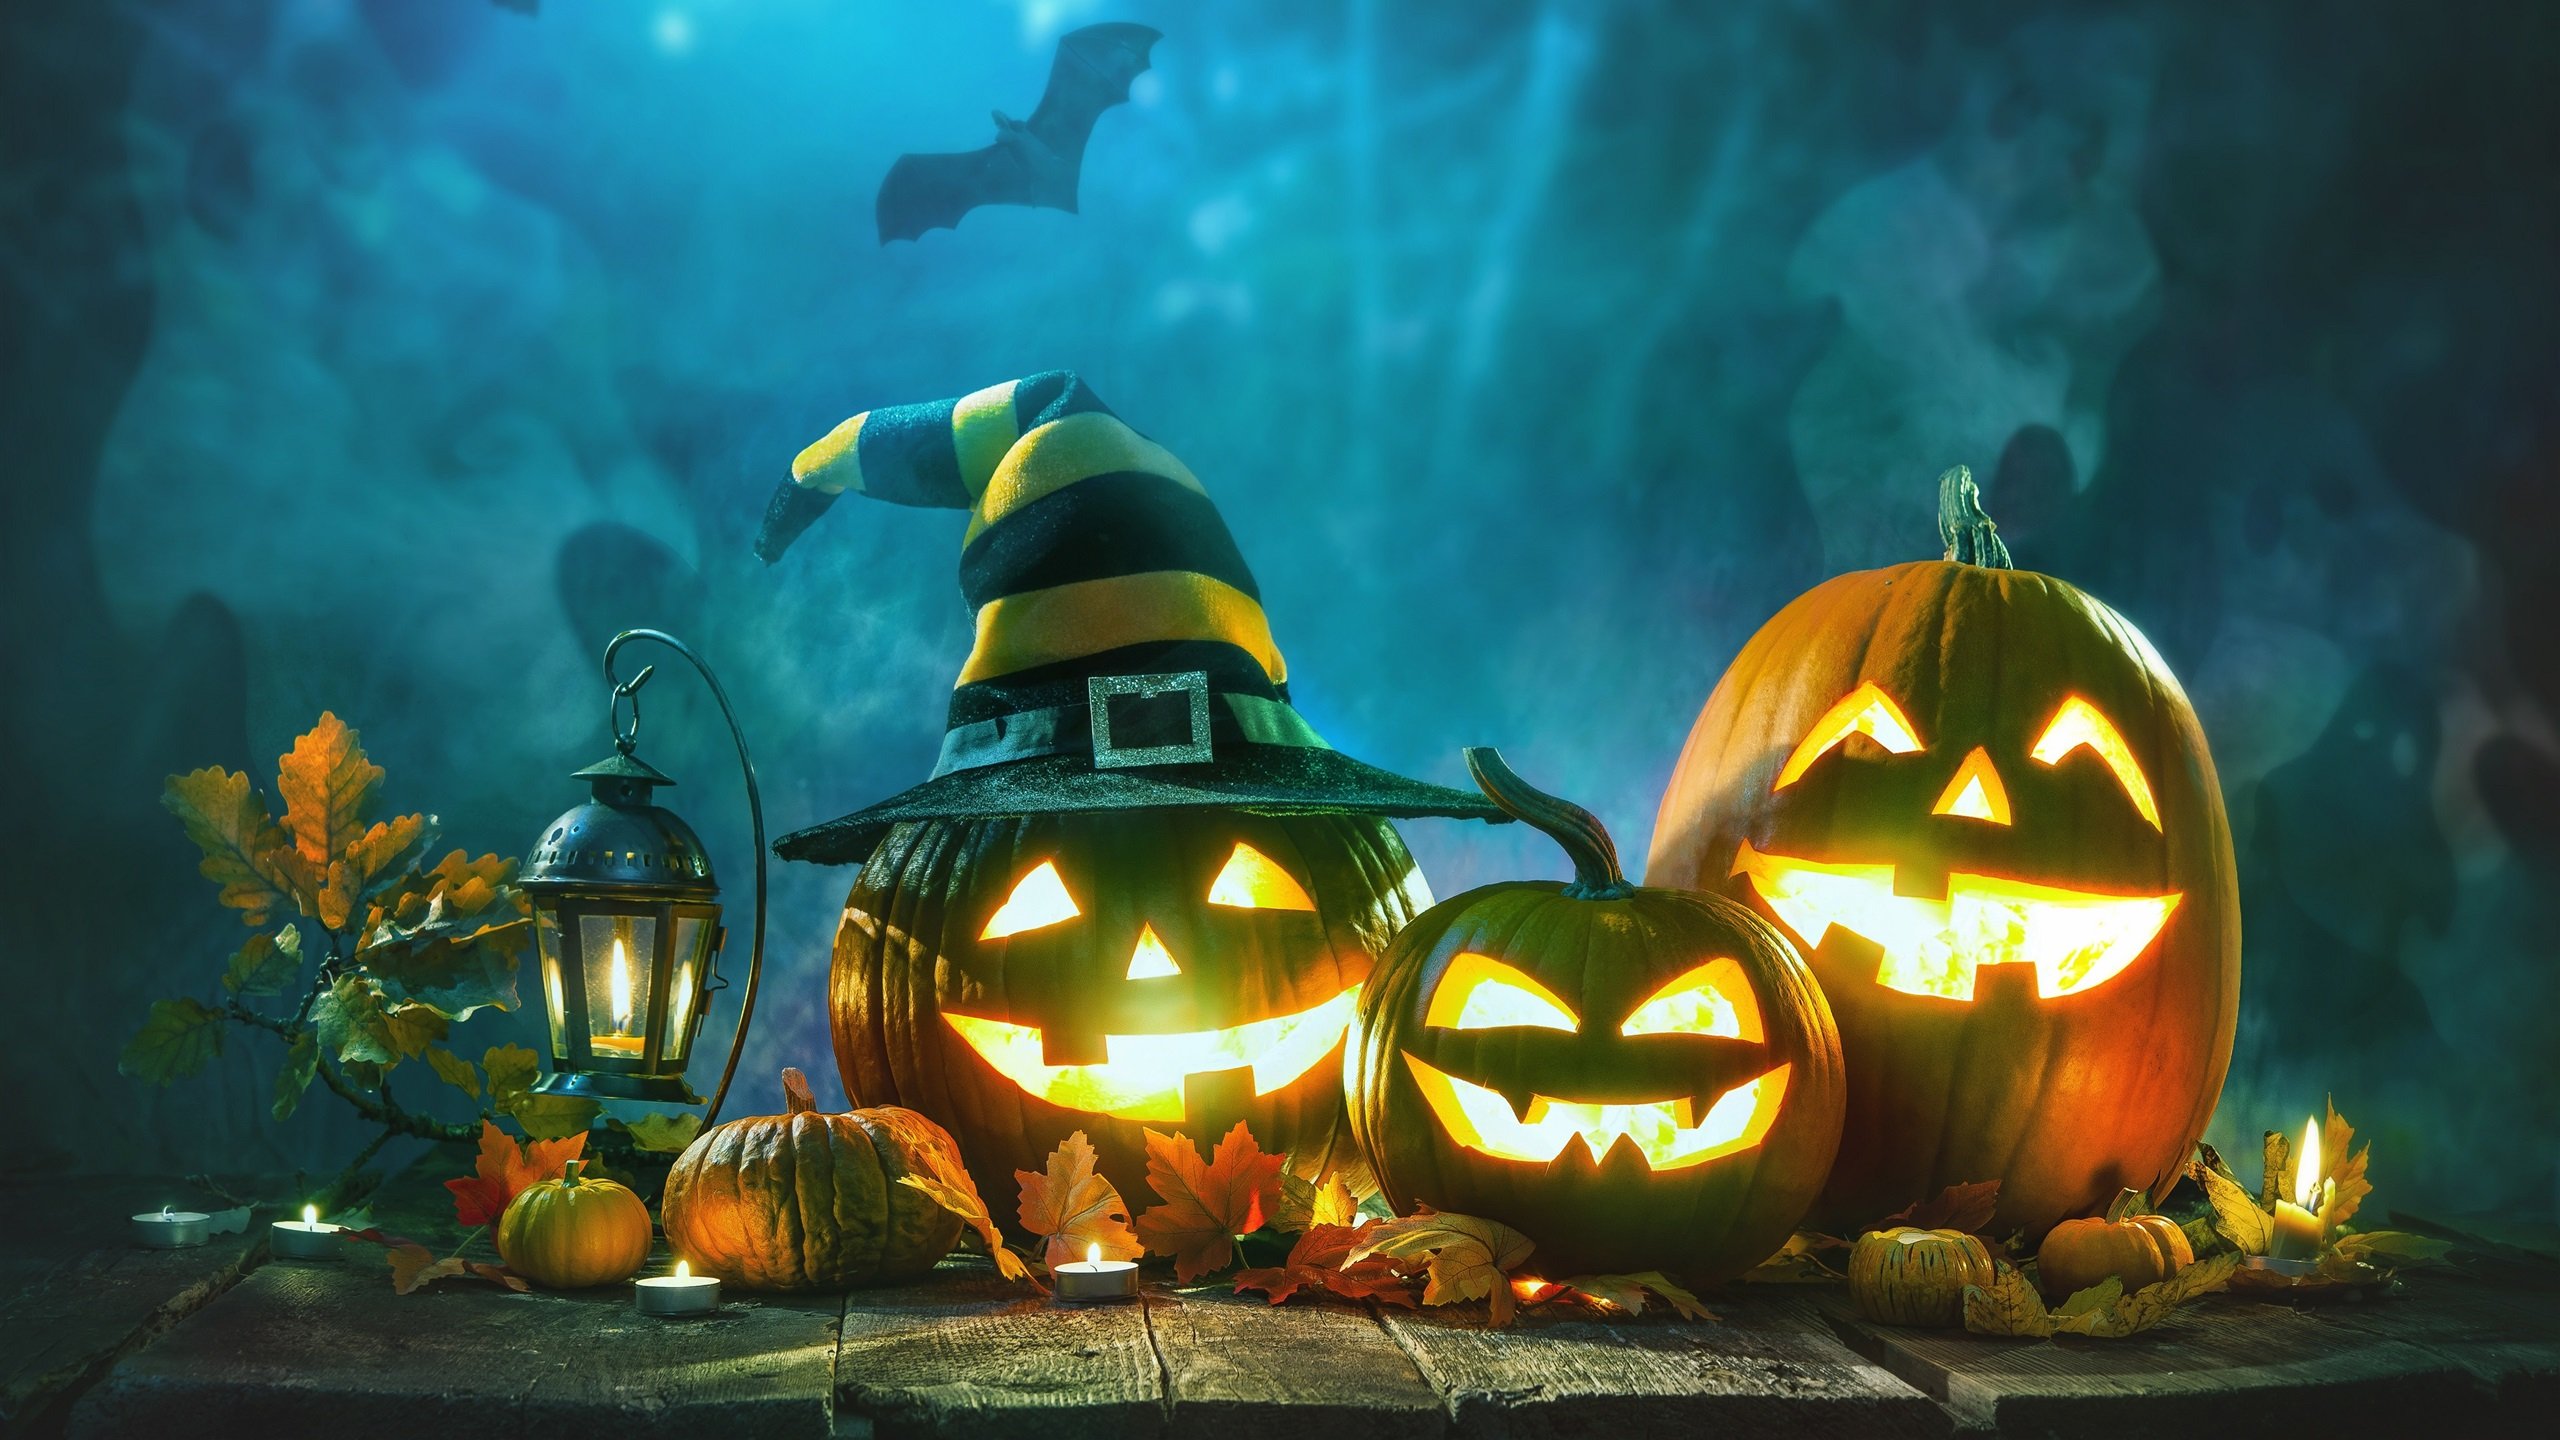 Wallpaper Halloween, pumpkin lamp, night 3840x2160 UHD 4K Picture, Image